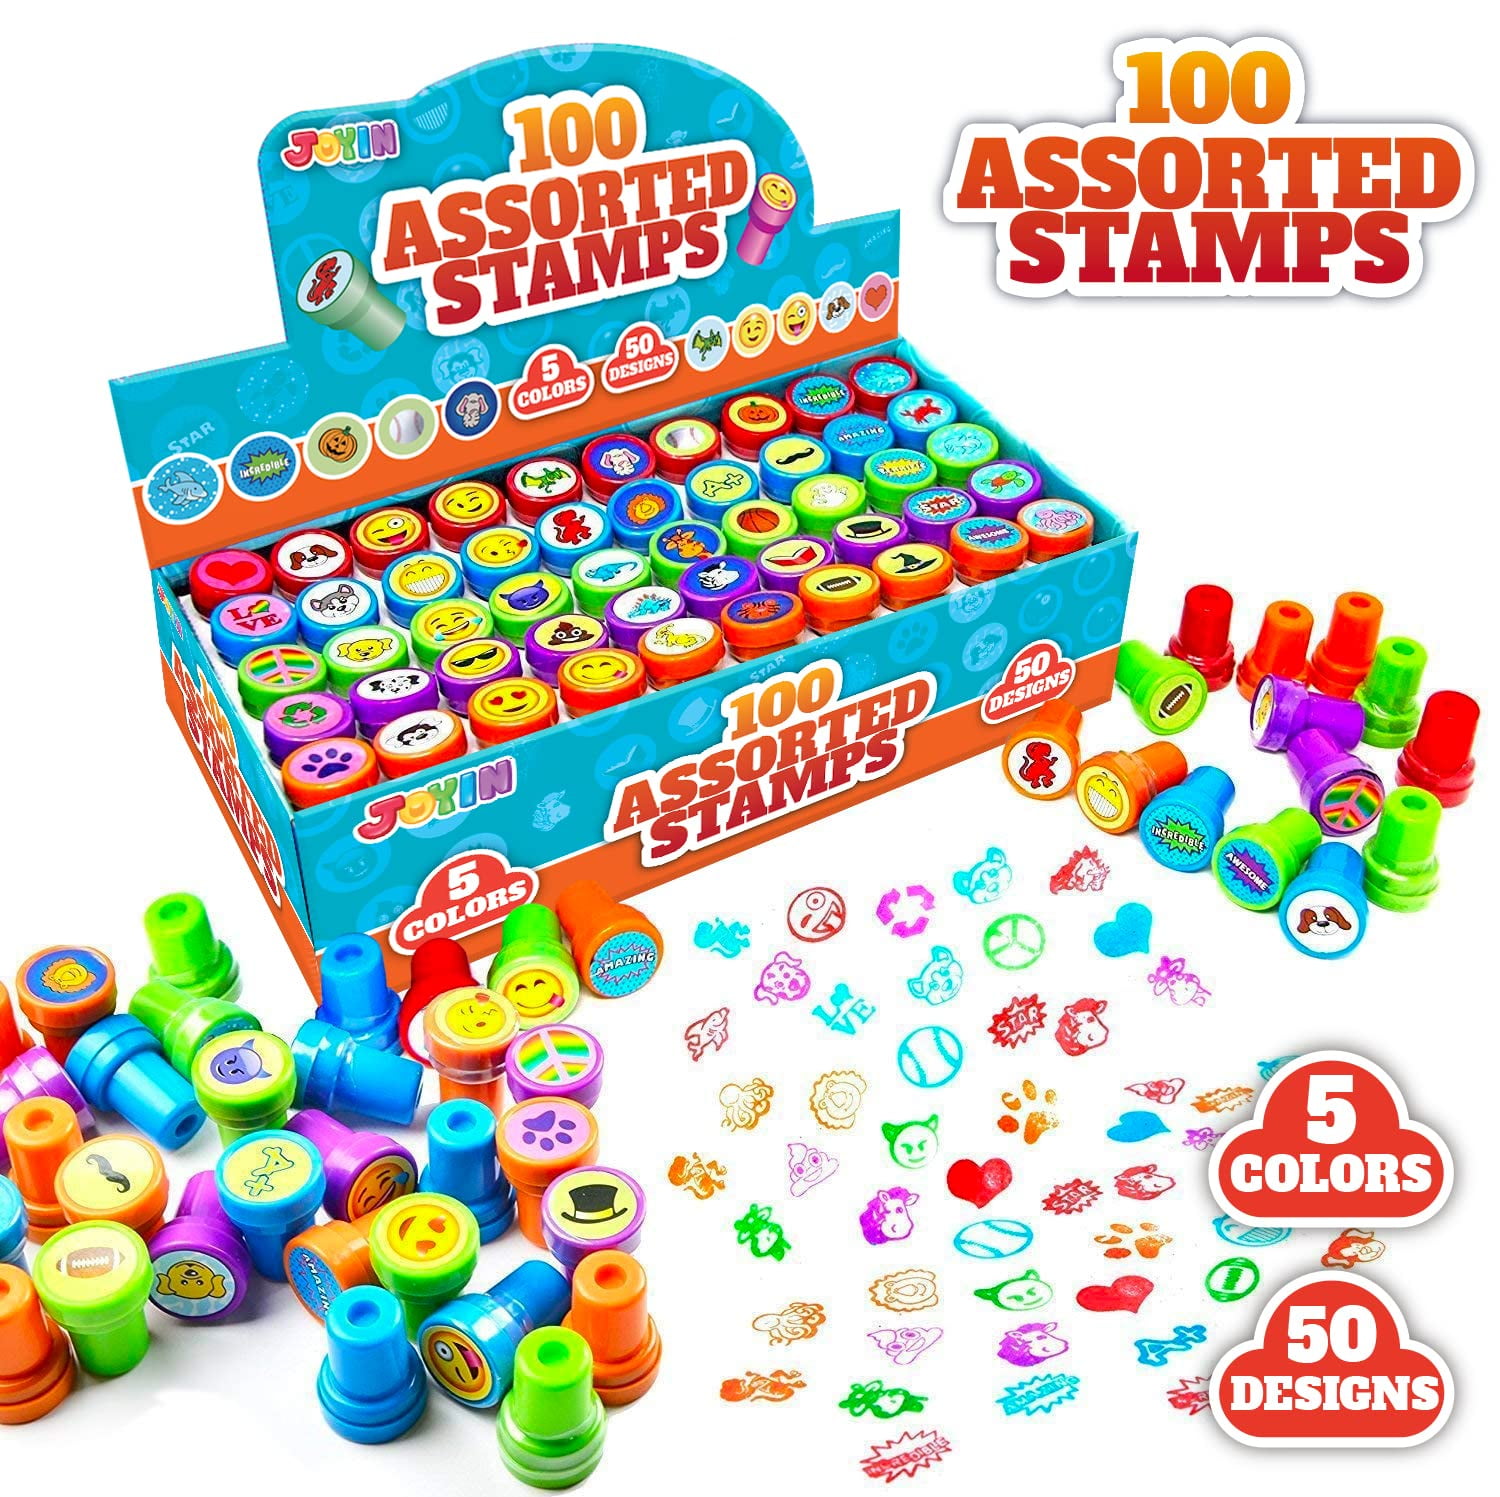 Happy Star Stamp, Smile Kawaii Star Rubber Stamp, Teacher Stamp, Planner  Stamps, Gift for Her, DIY Valentine's